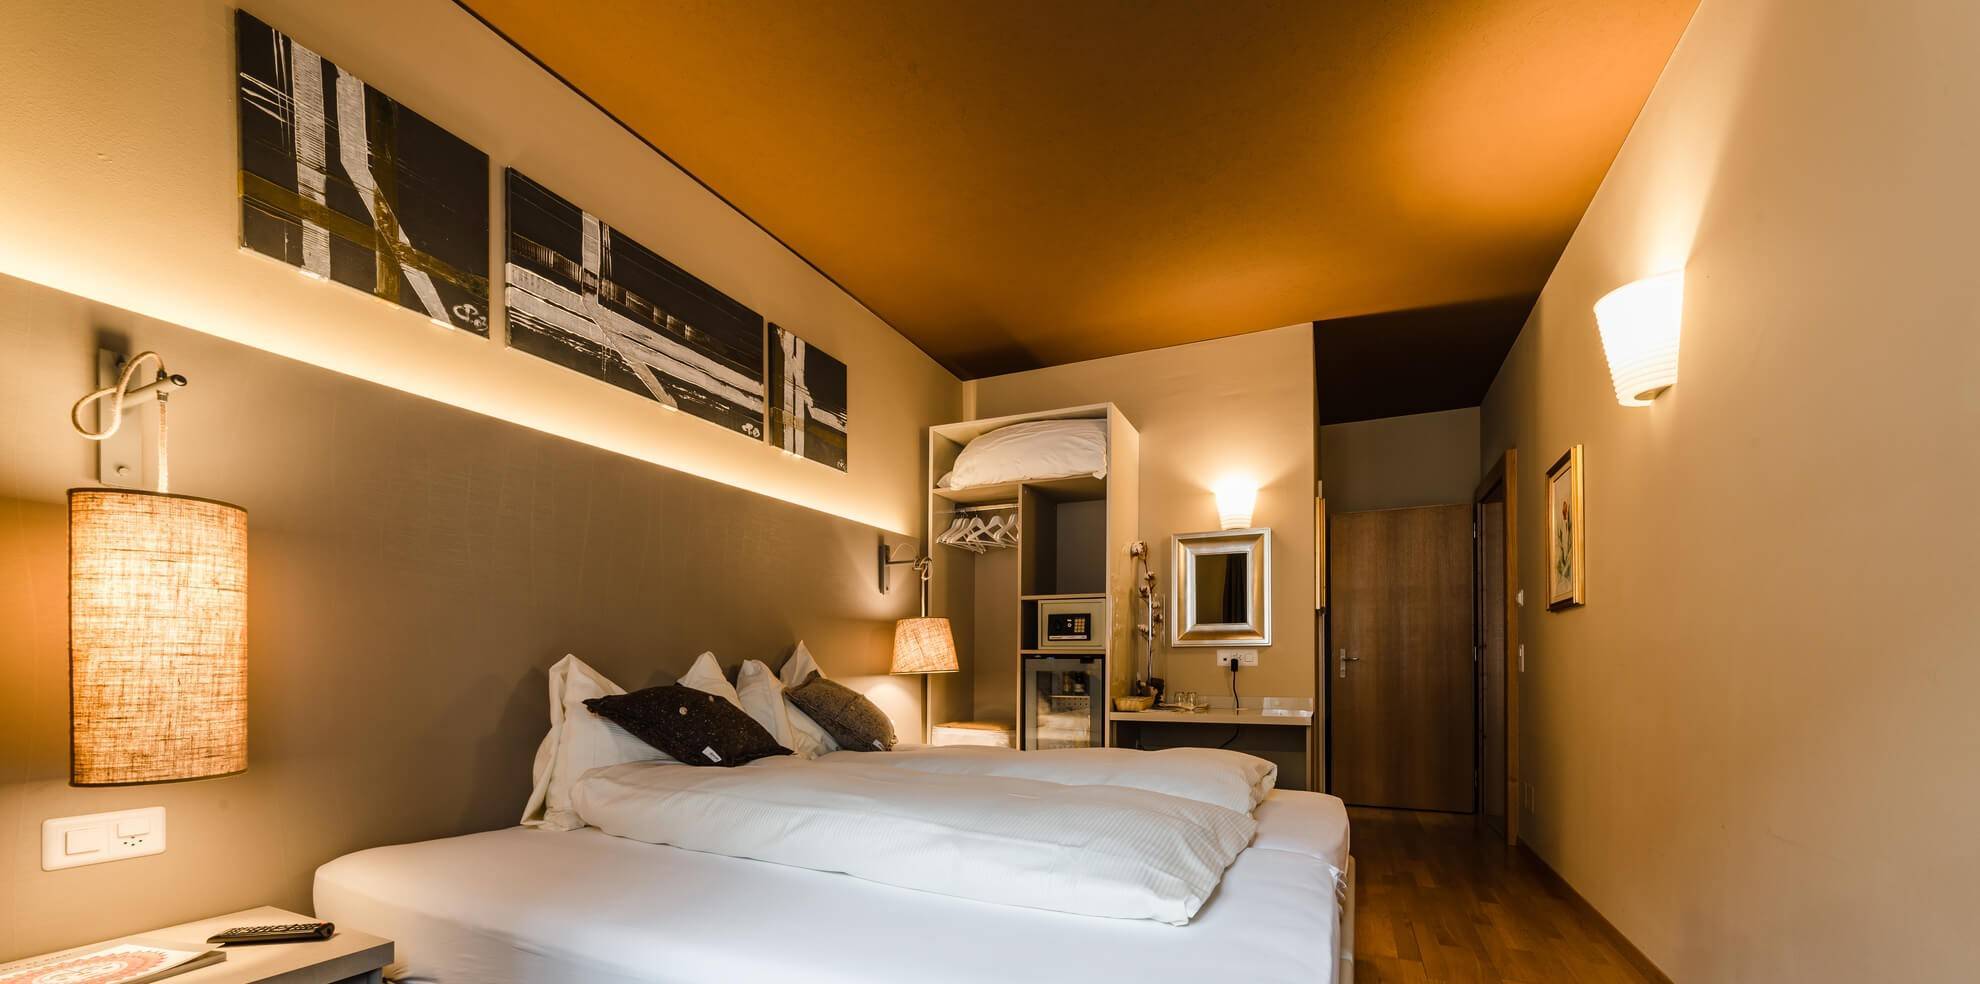 Hotel a Poschiavo: ospitalitàin camera doppia